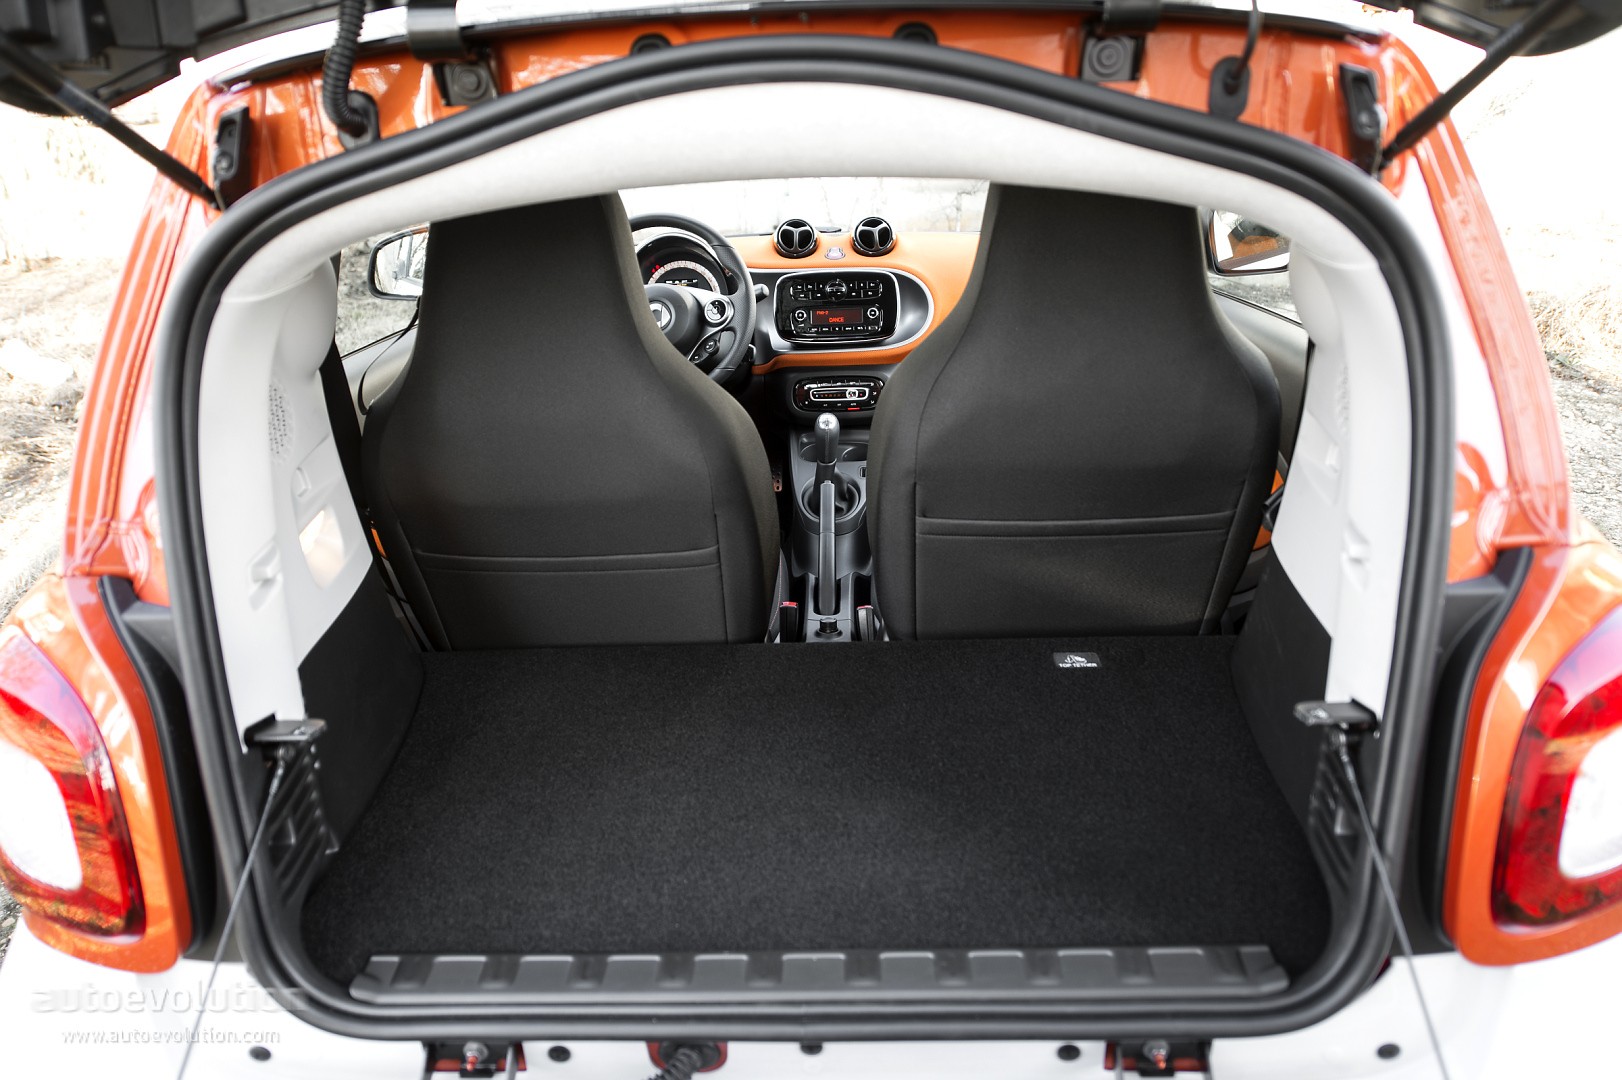 smart car interior back